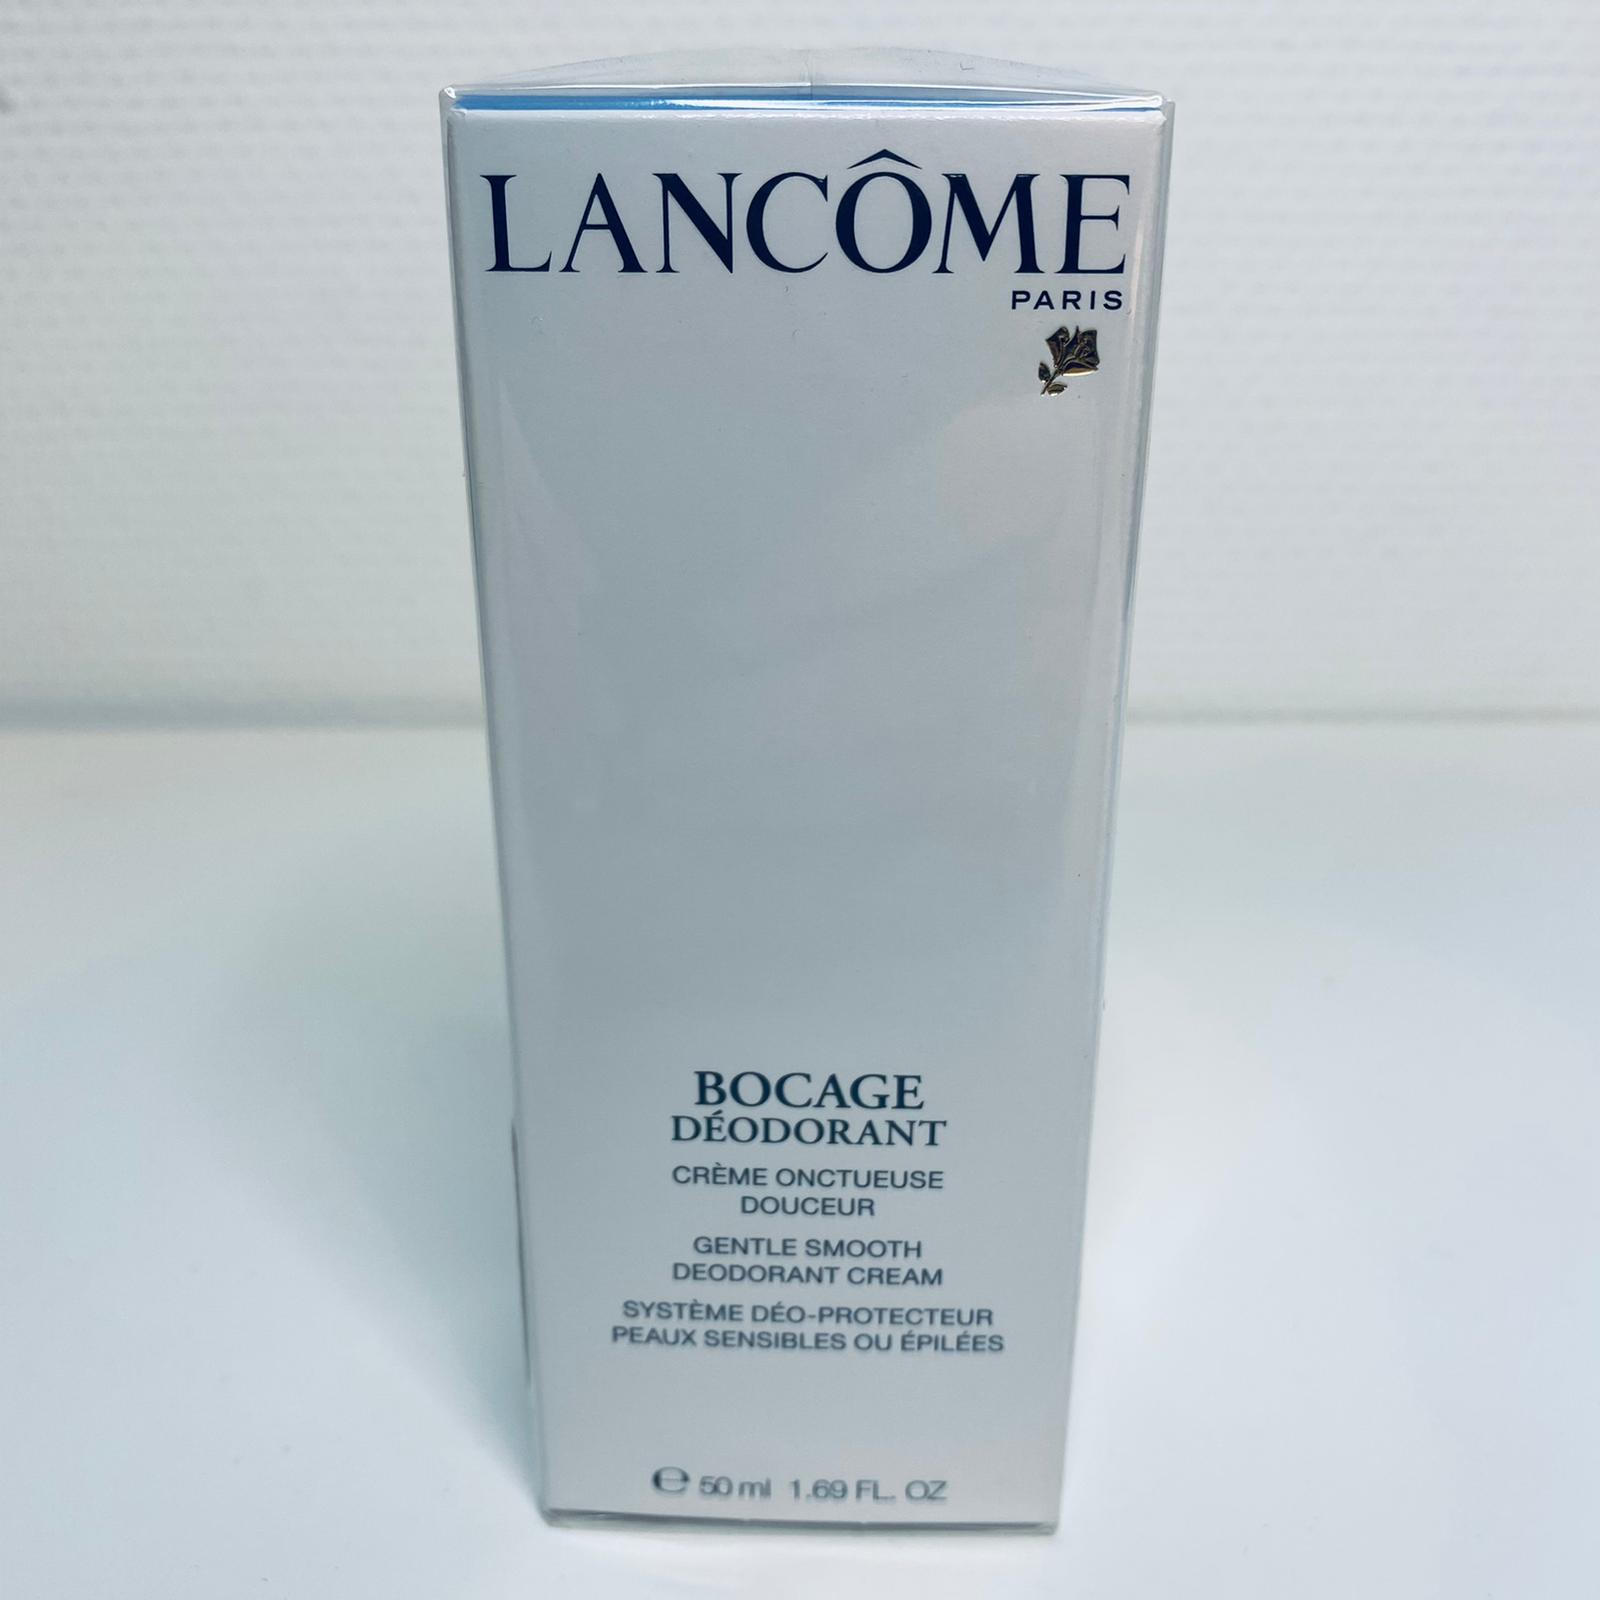 Lancome Bocage Deodorant cream 50 ml